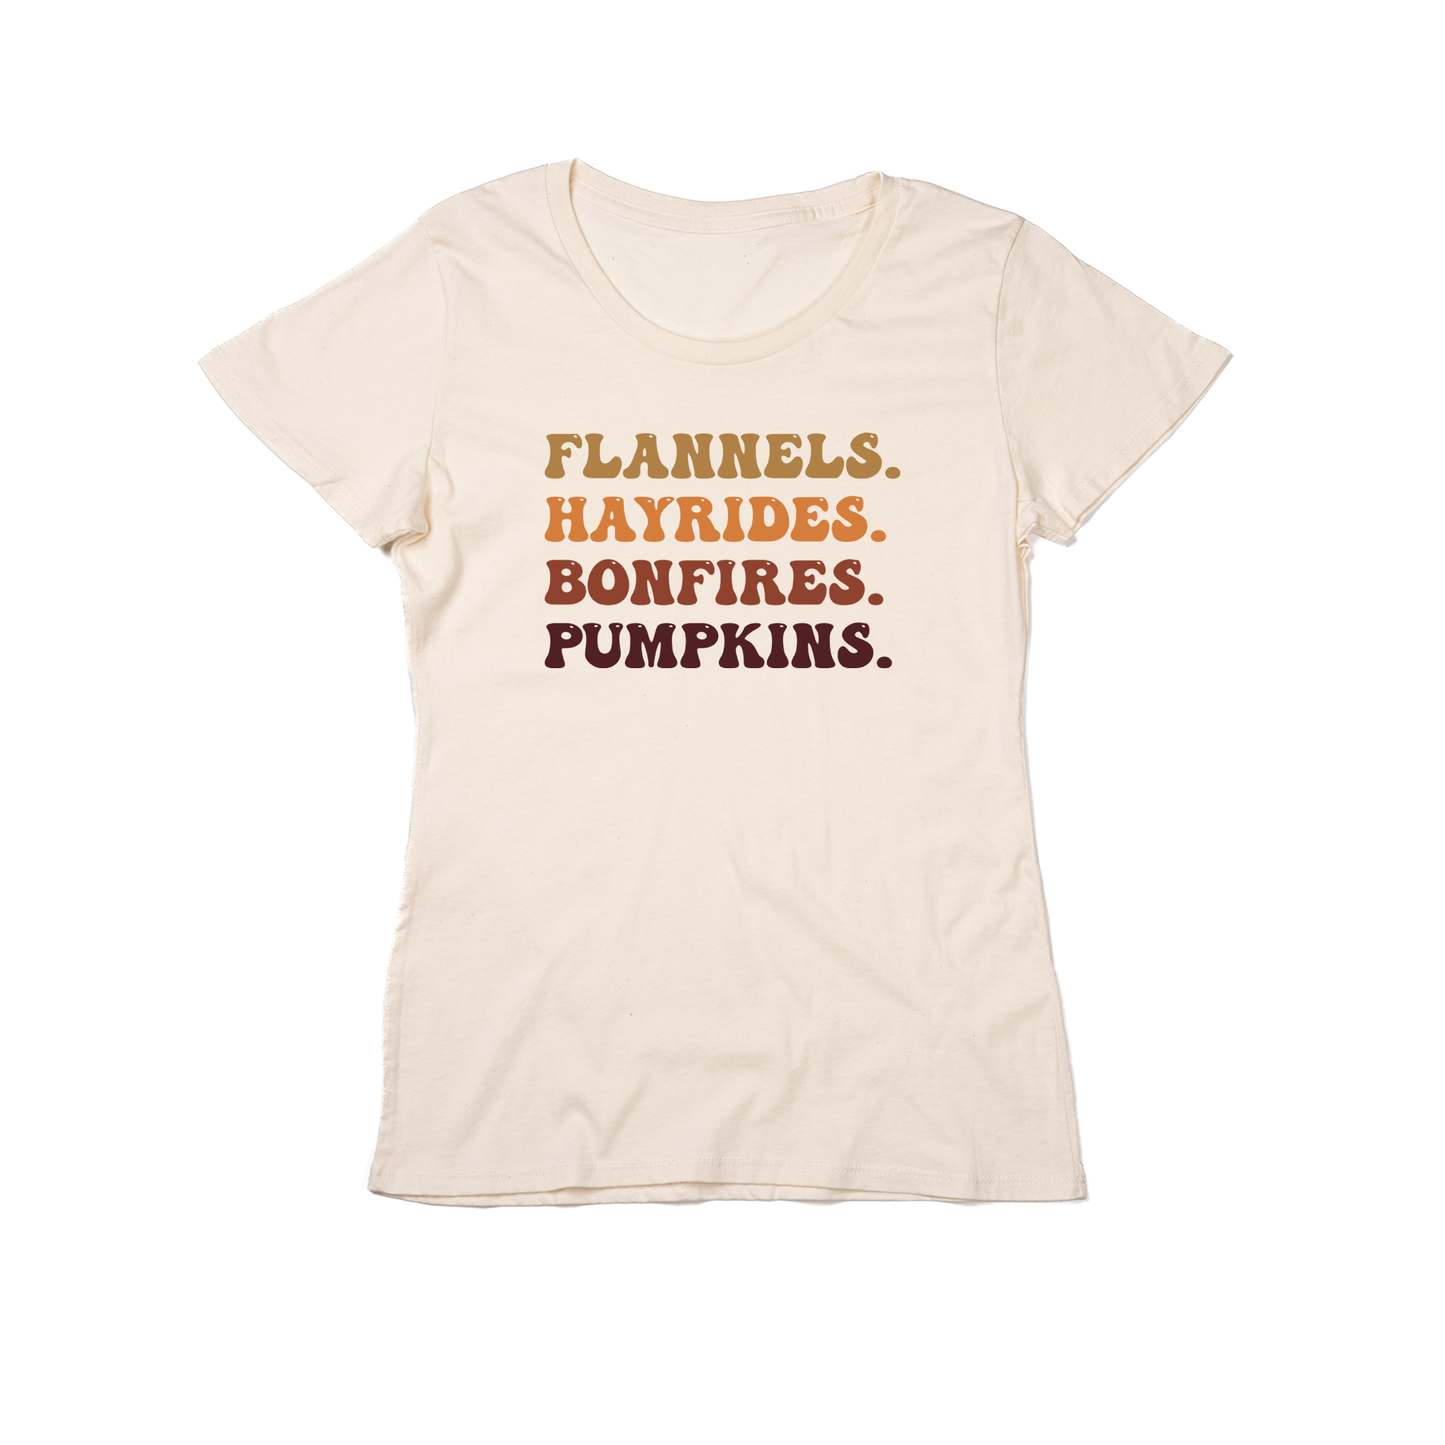 Flannels, Hayrides, Bonfires, Pumpkins - Women's Fitted Tee (Natural)